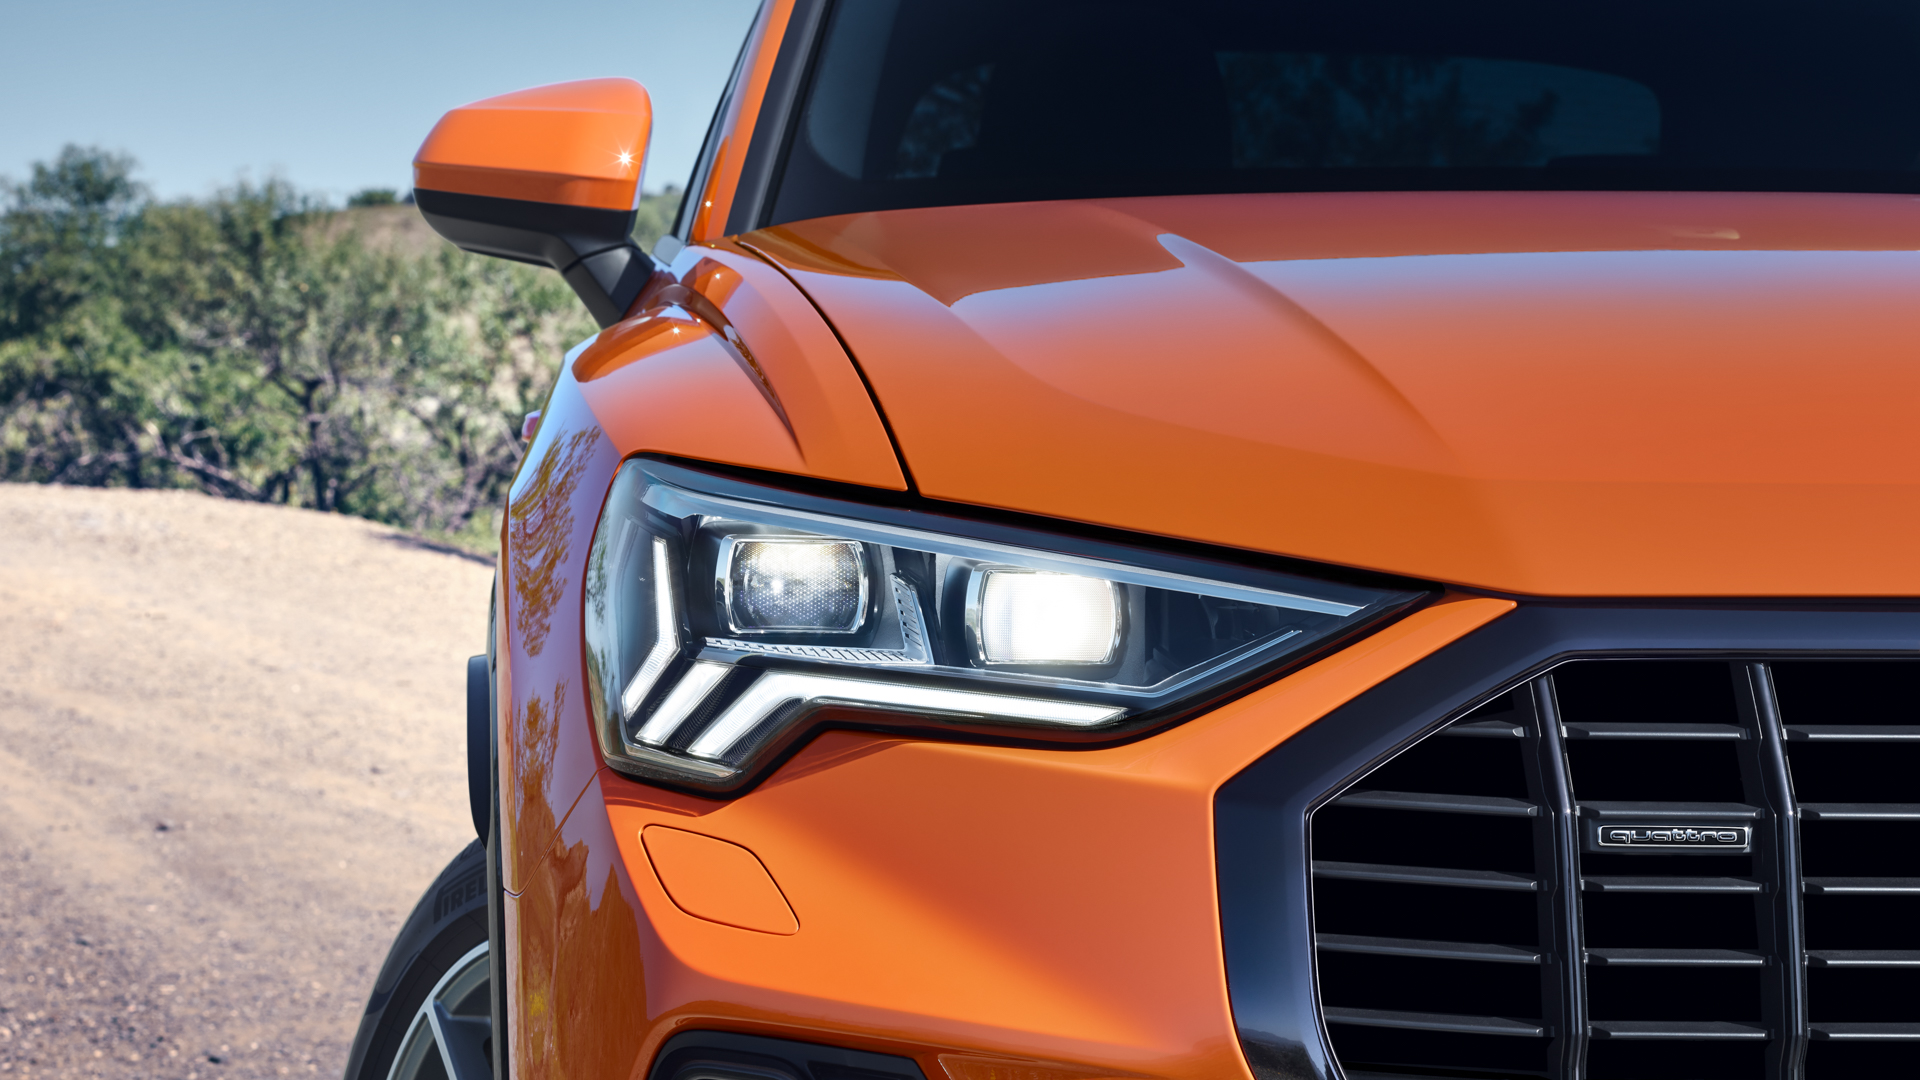 2020 Audi RS Q3 görüntülendi!